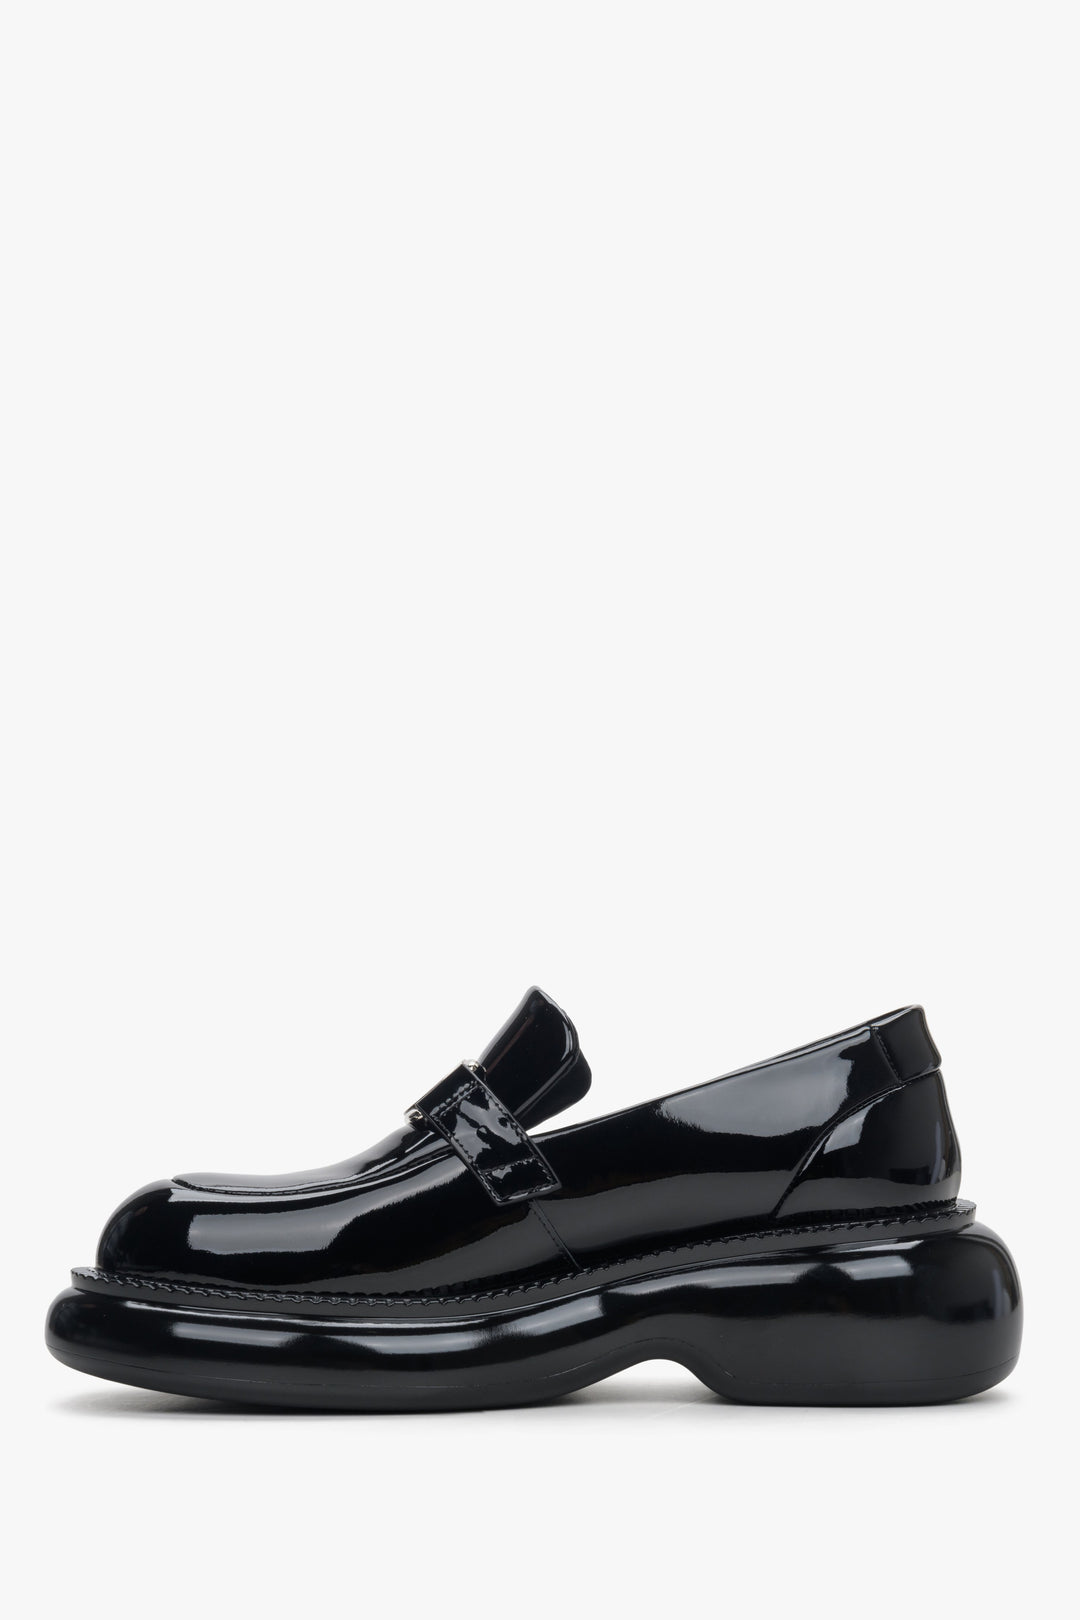 Women's elegant black patent leather loafers Estro - shoe sideline.